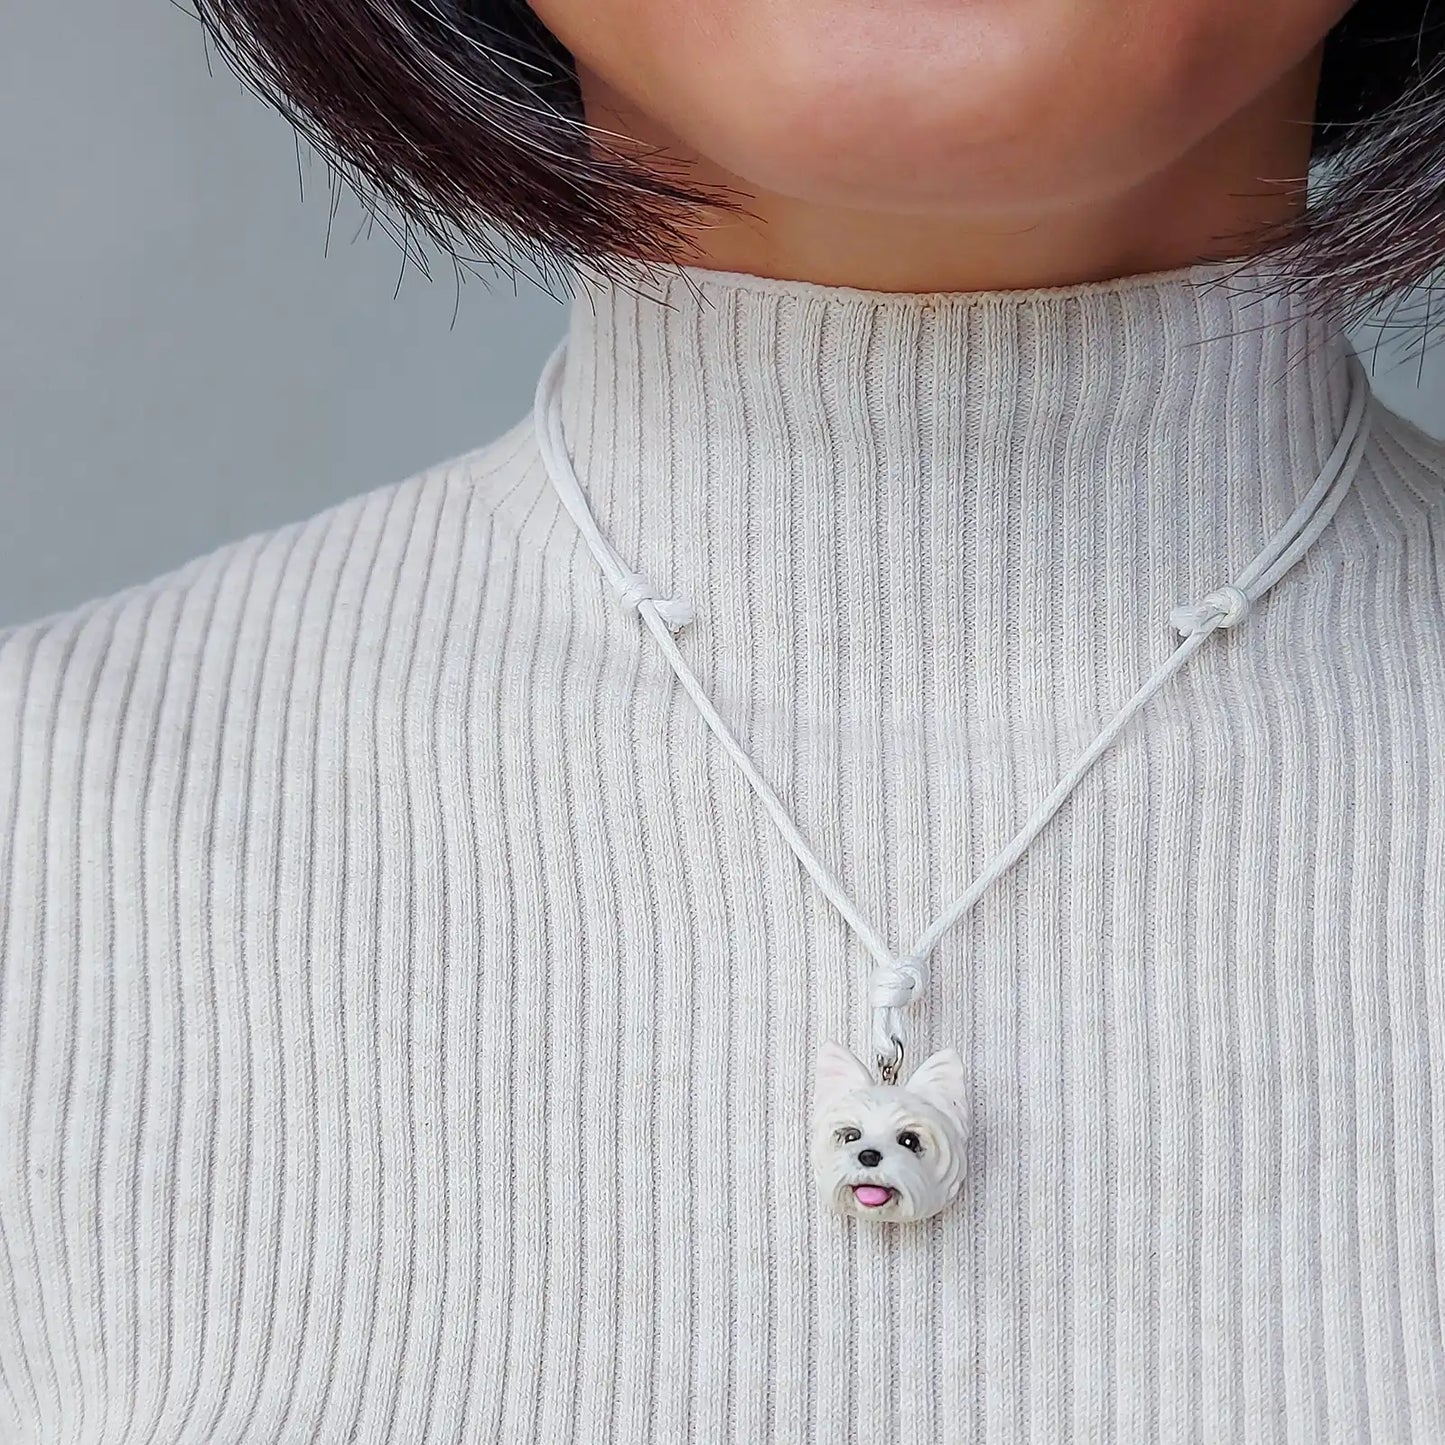 dog Westie West Highland White Terrier pendant wearing